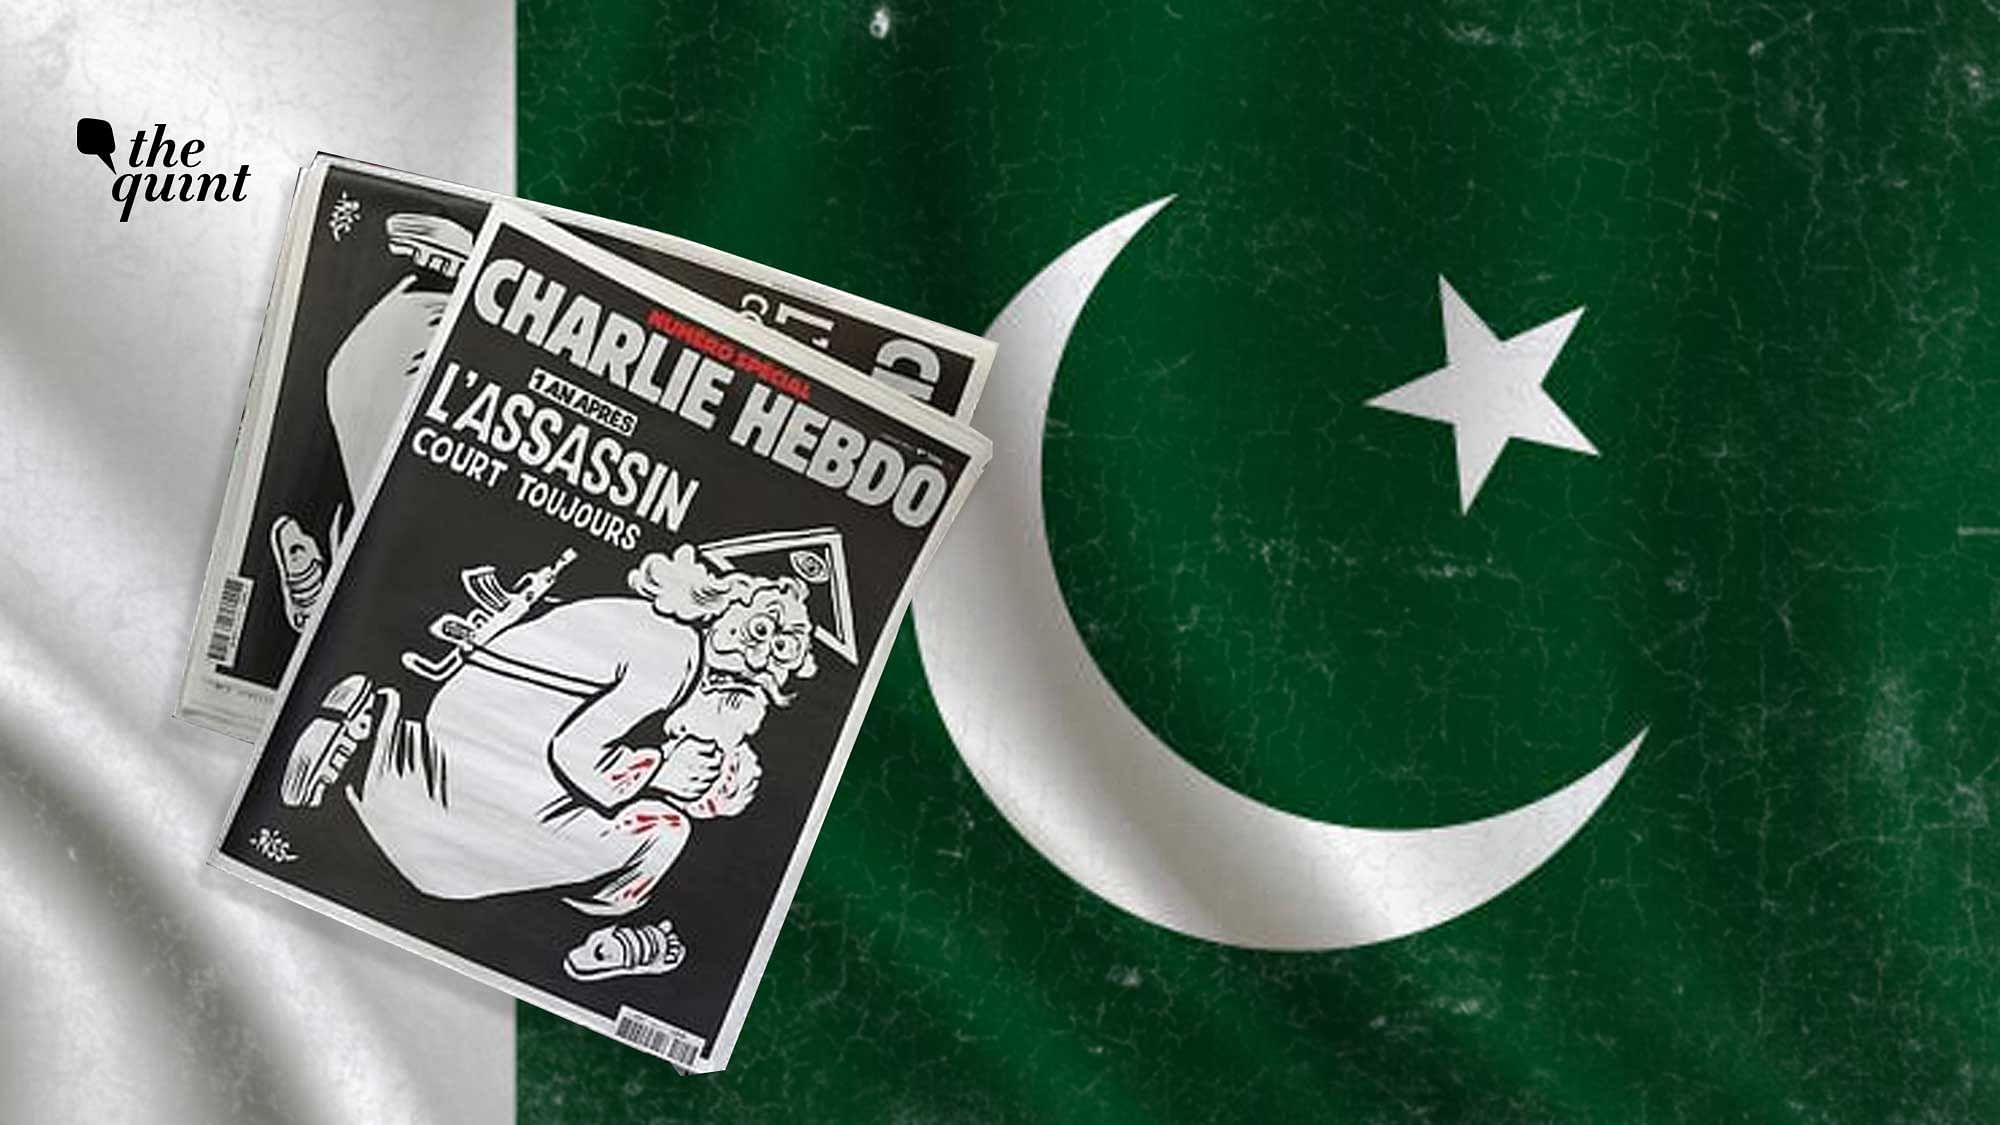 Image of Charlie Hebdo magazine and Pakistani flag used for representational purposes.